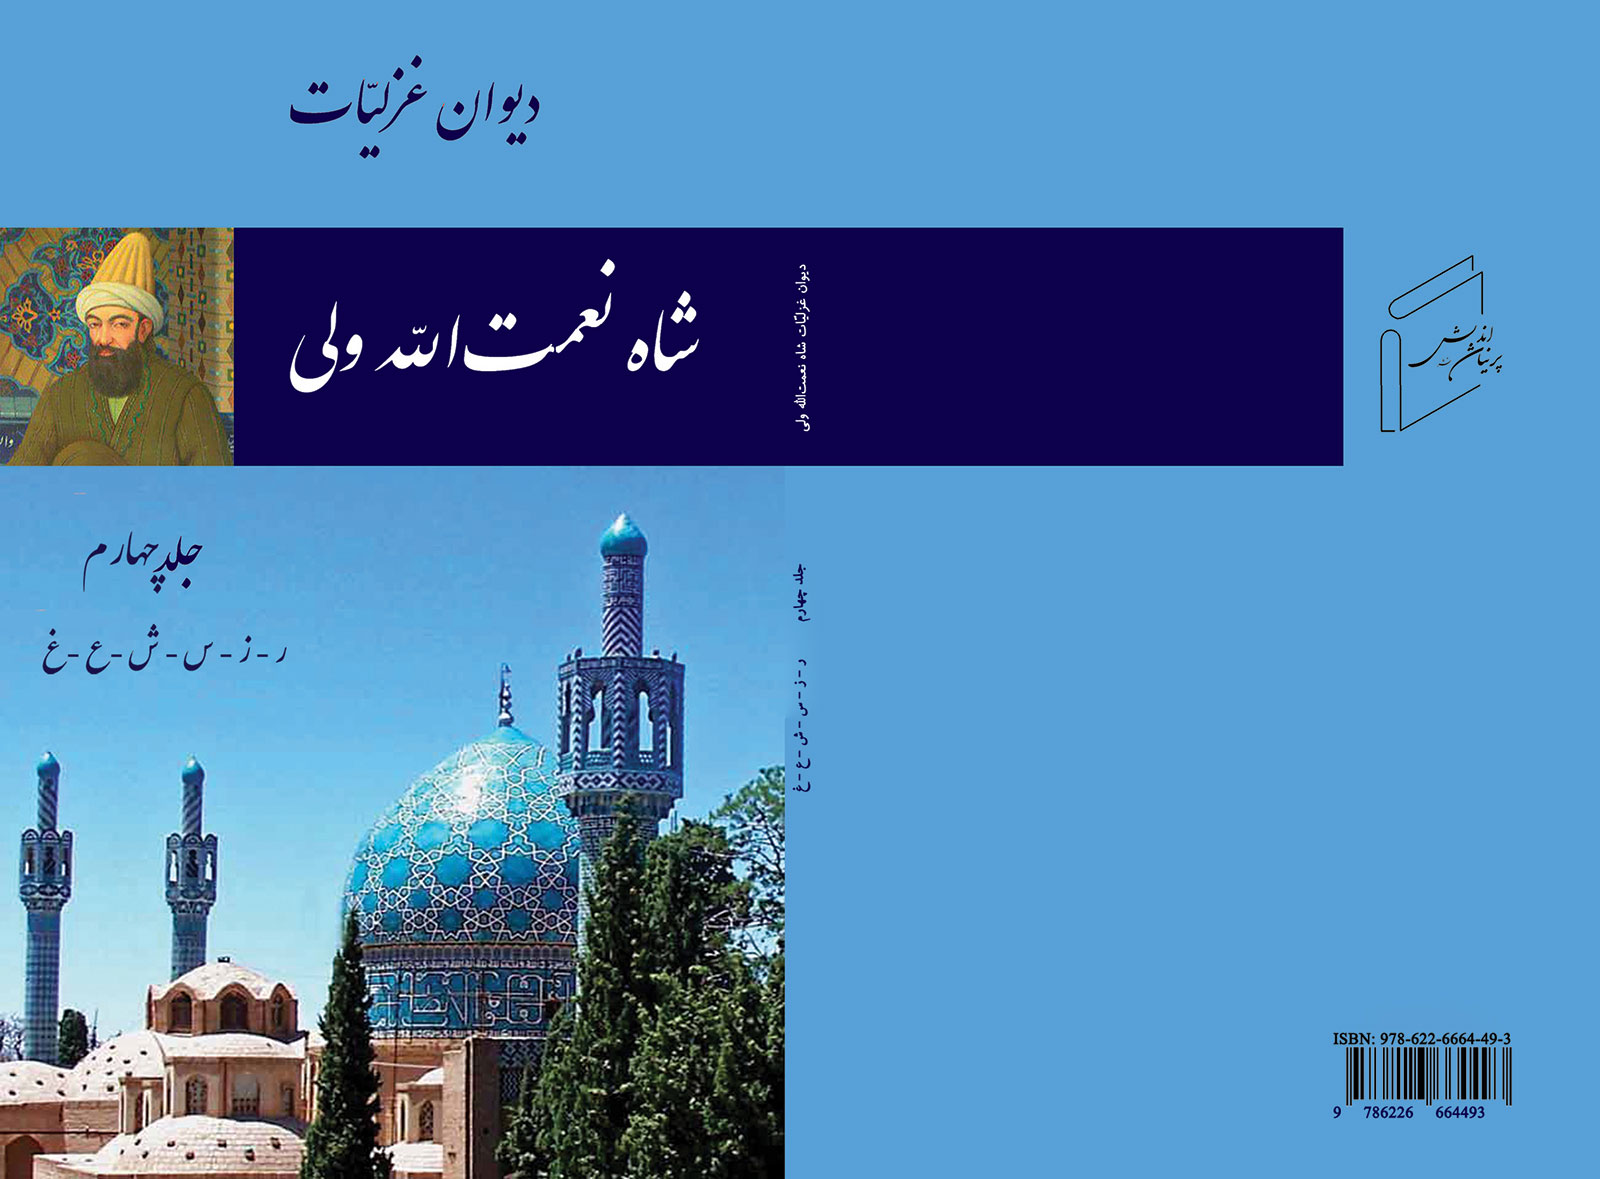 The Diwan of Shah Nematullah Vali, Ghazliat - Volume 4